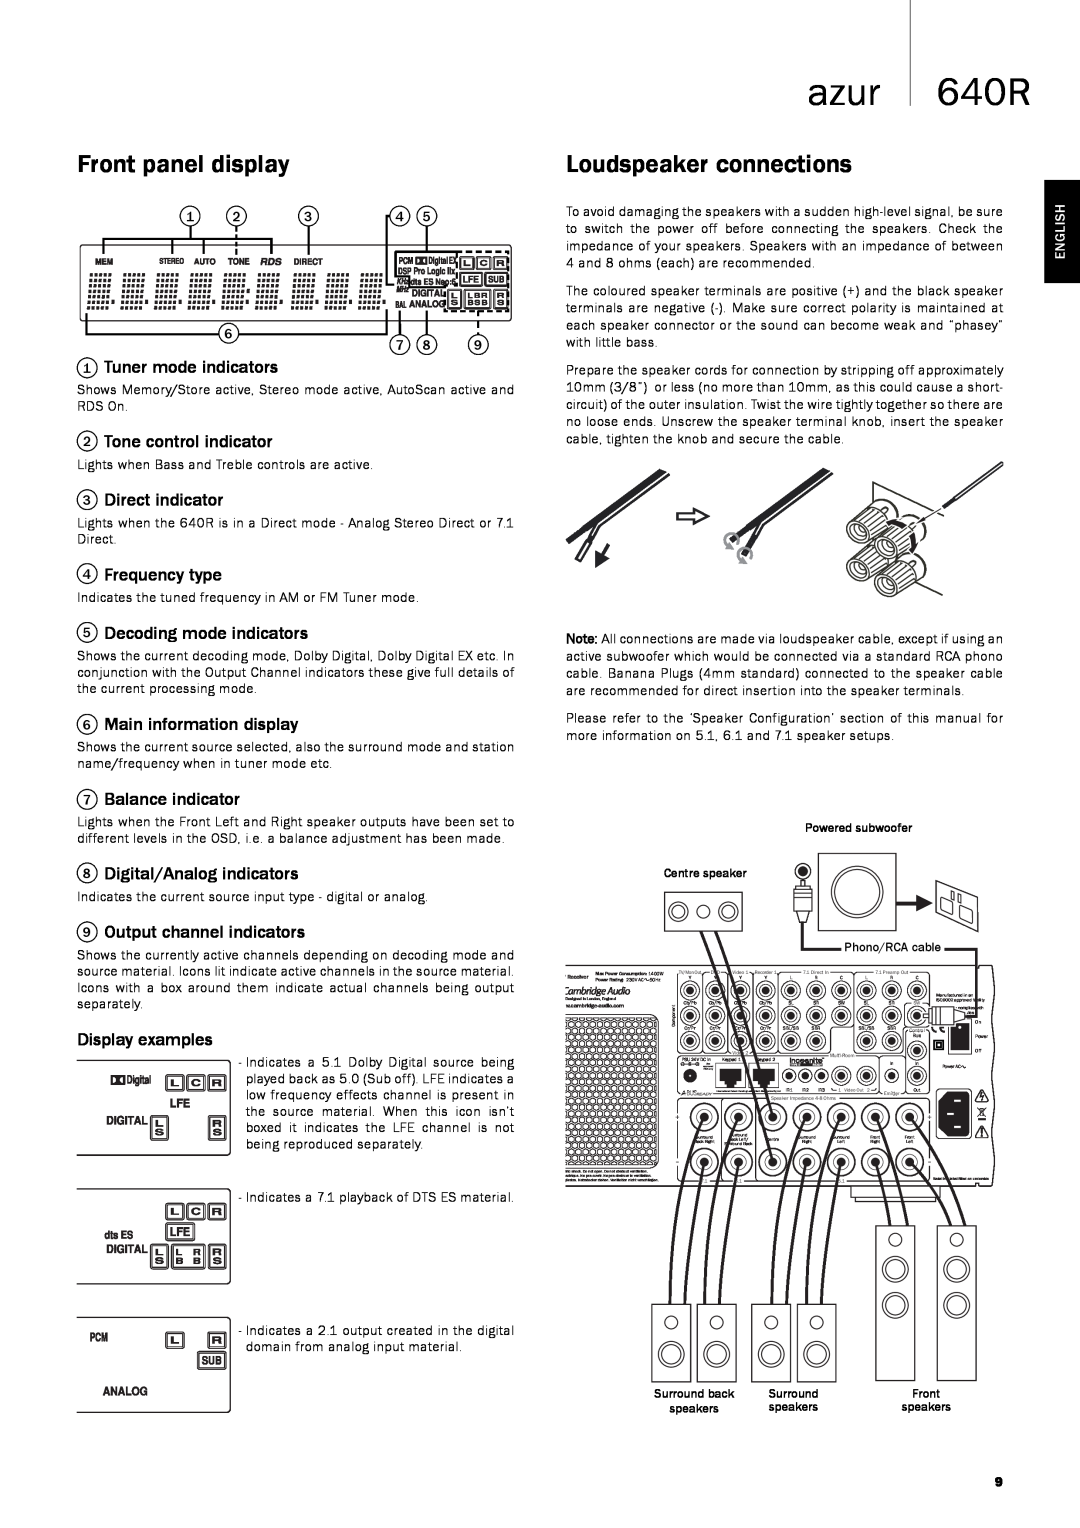 Cambridge Audio 640Razur user manual Front panel display, Loudspeaker connections, azur 640R 